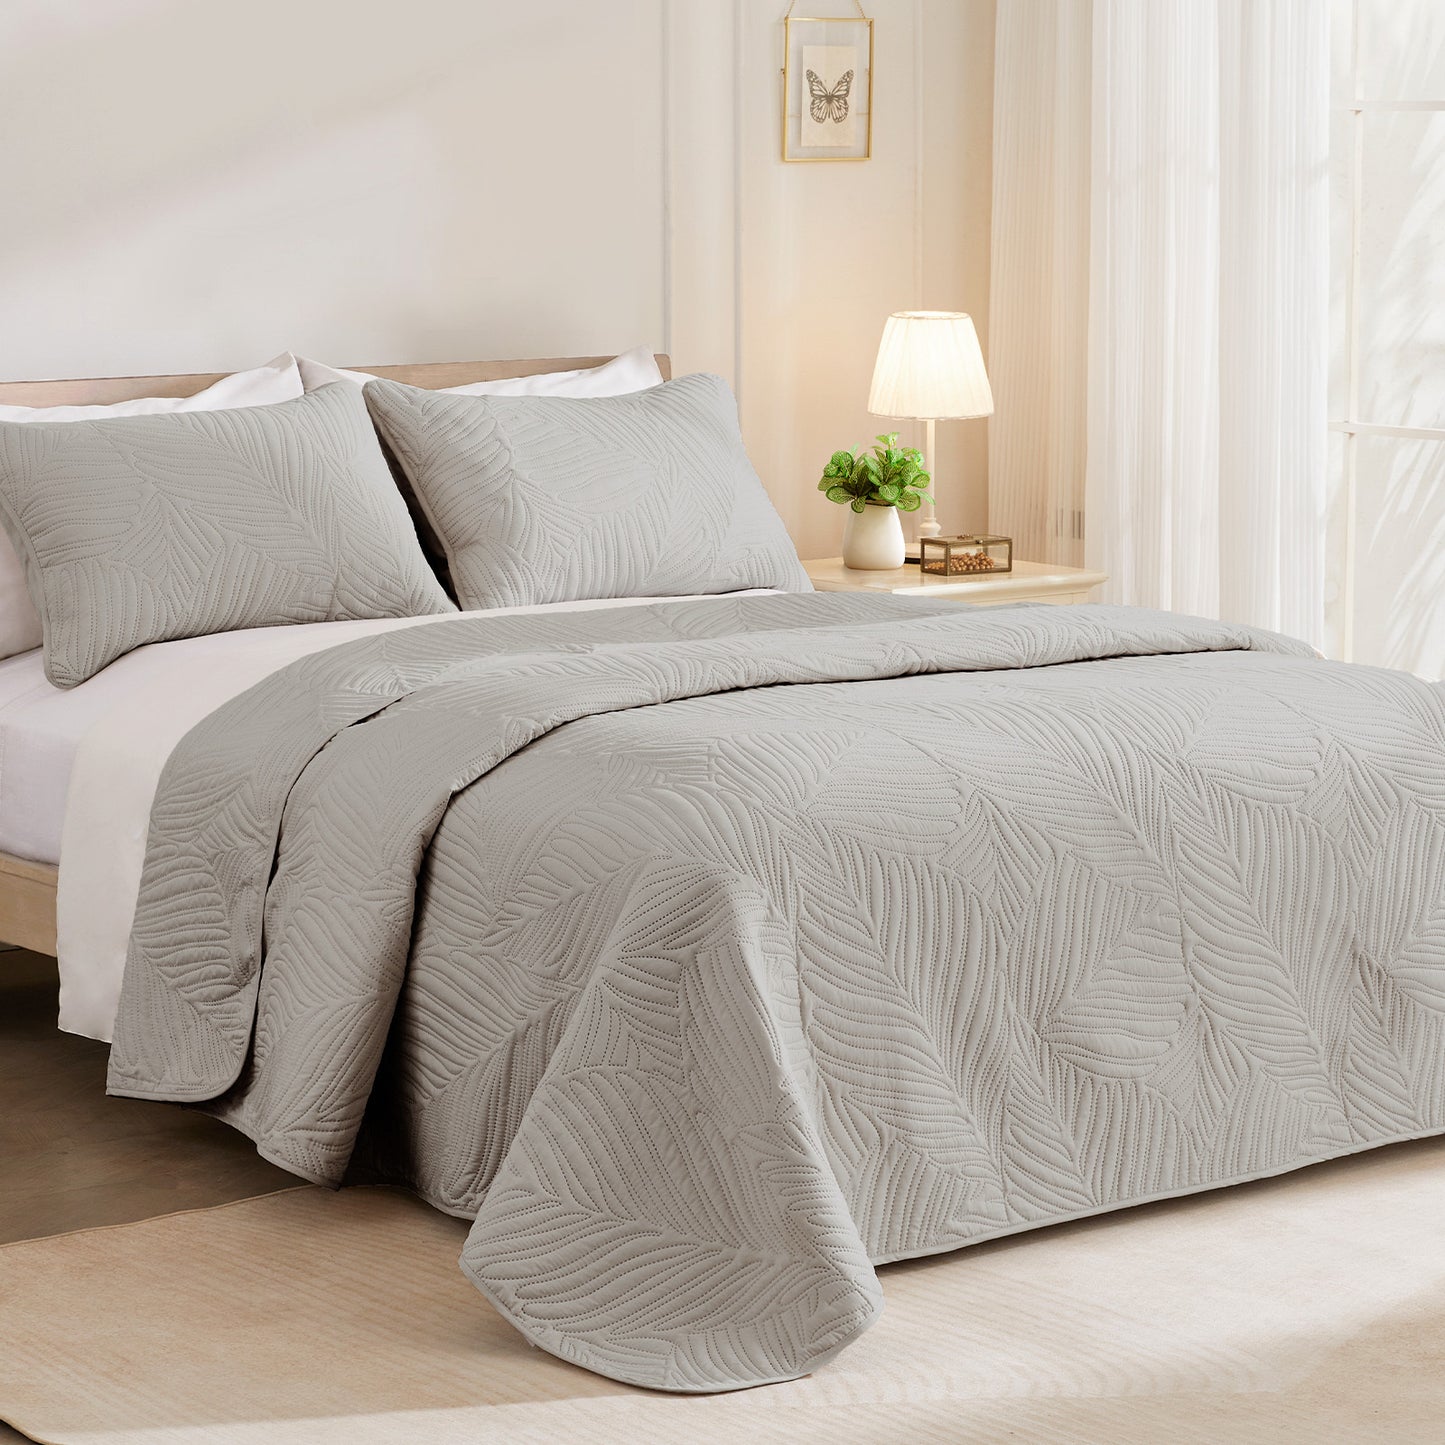 Exclusivo Mezcla California King Quilt Set Light Grey, Lightweight Bedspread Leaf Pattern Bed Cover Soft Coverlet Bedding Set(1 Quilt, 2 Pillow Shams)